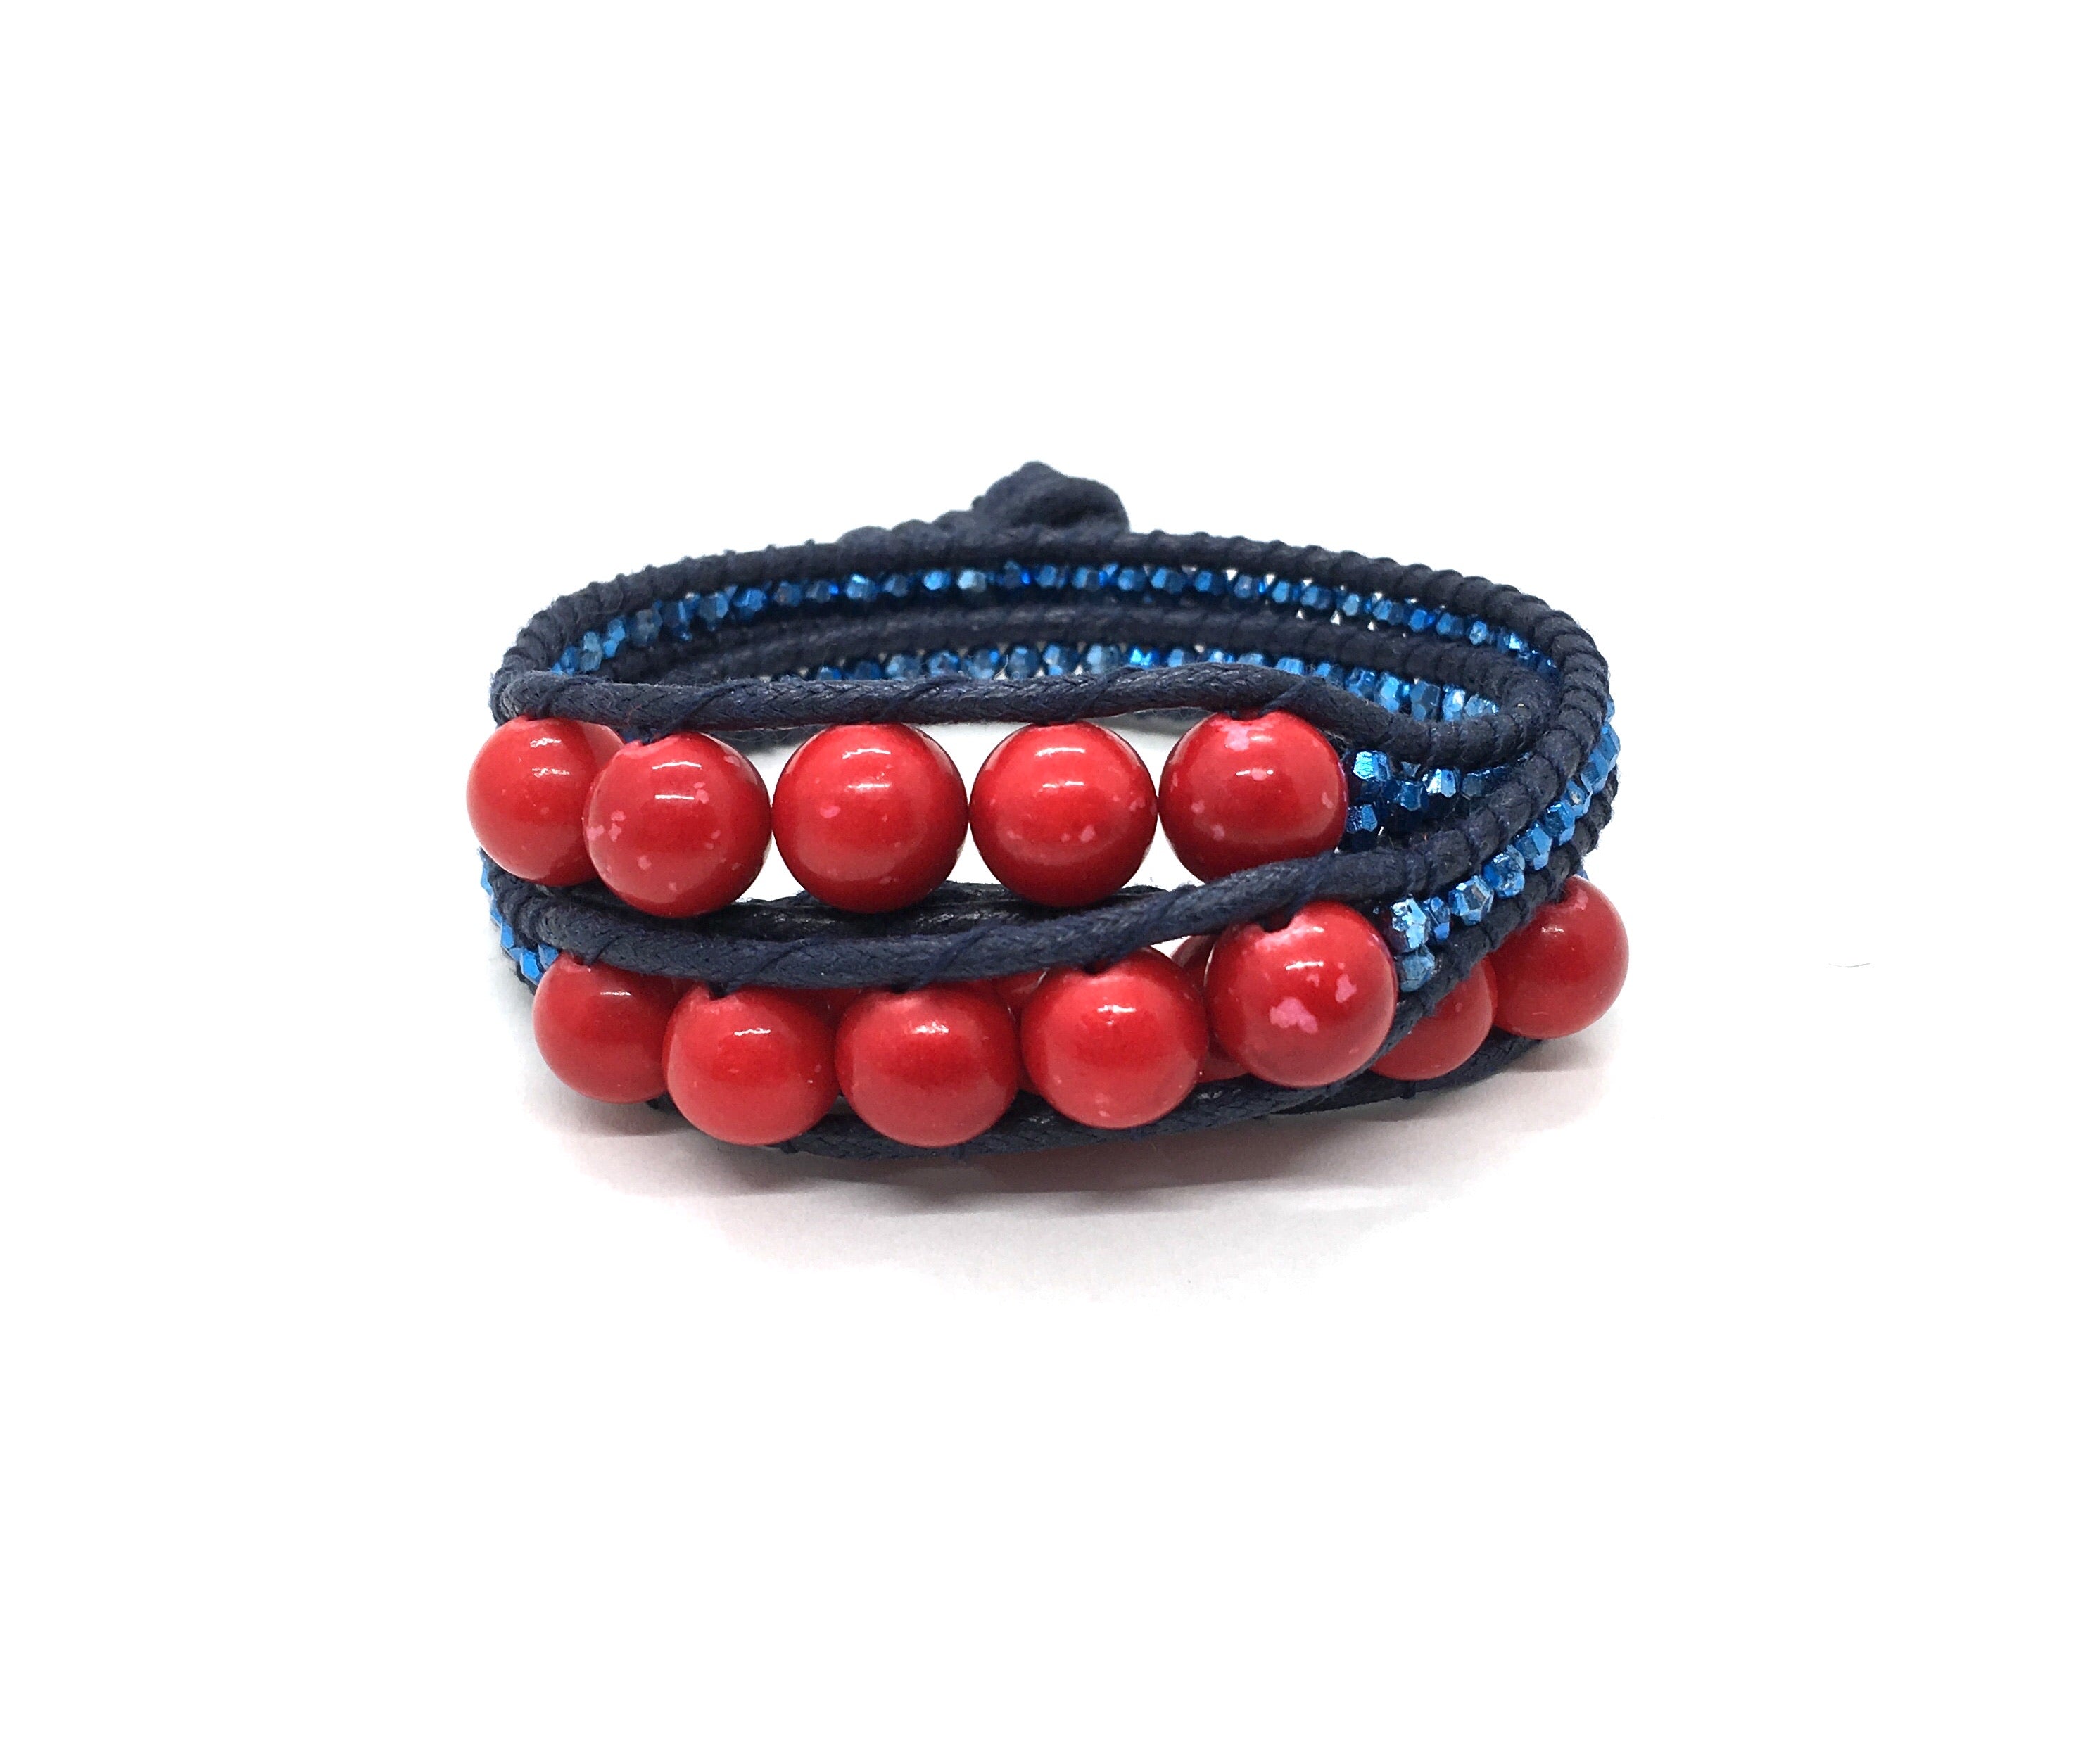 Wraparound red stone bracelet, metalic blue resin side bead, dark blue cord, dark blue thread.